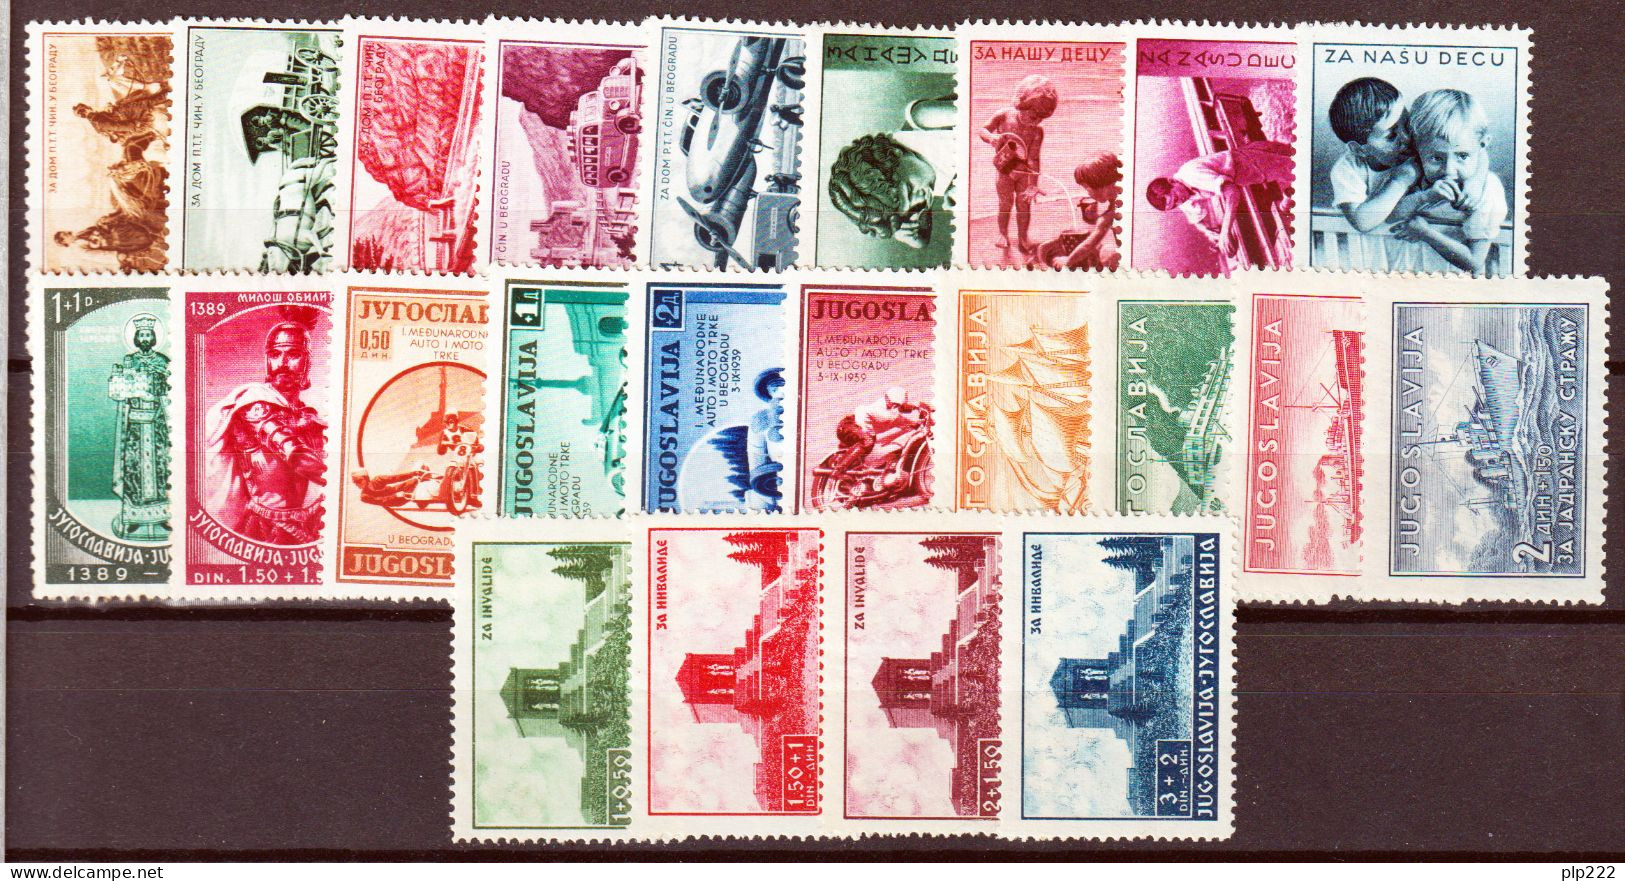 Jugoslavia 1939 Annata Completa Commemorativi / Complete Year Set Commemoratives **/MNH VF/F - Años Completos